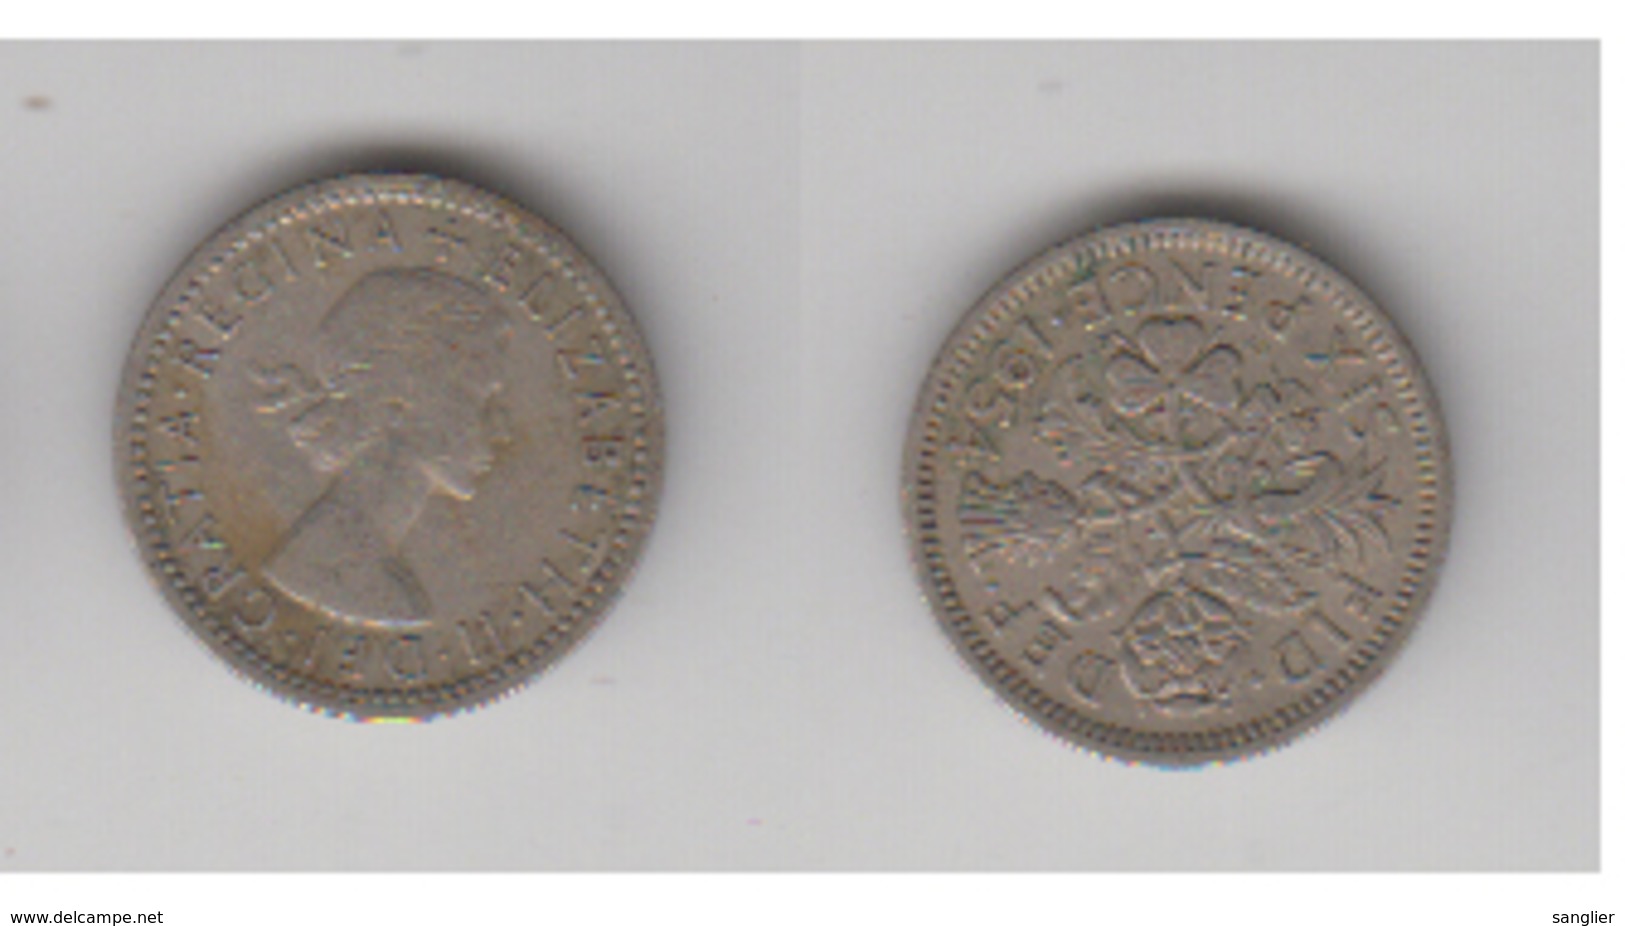 SIX PENCE 1954 - H. 6 Pence